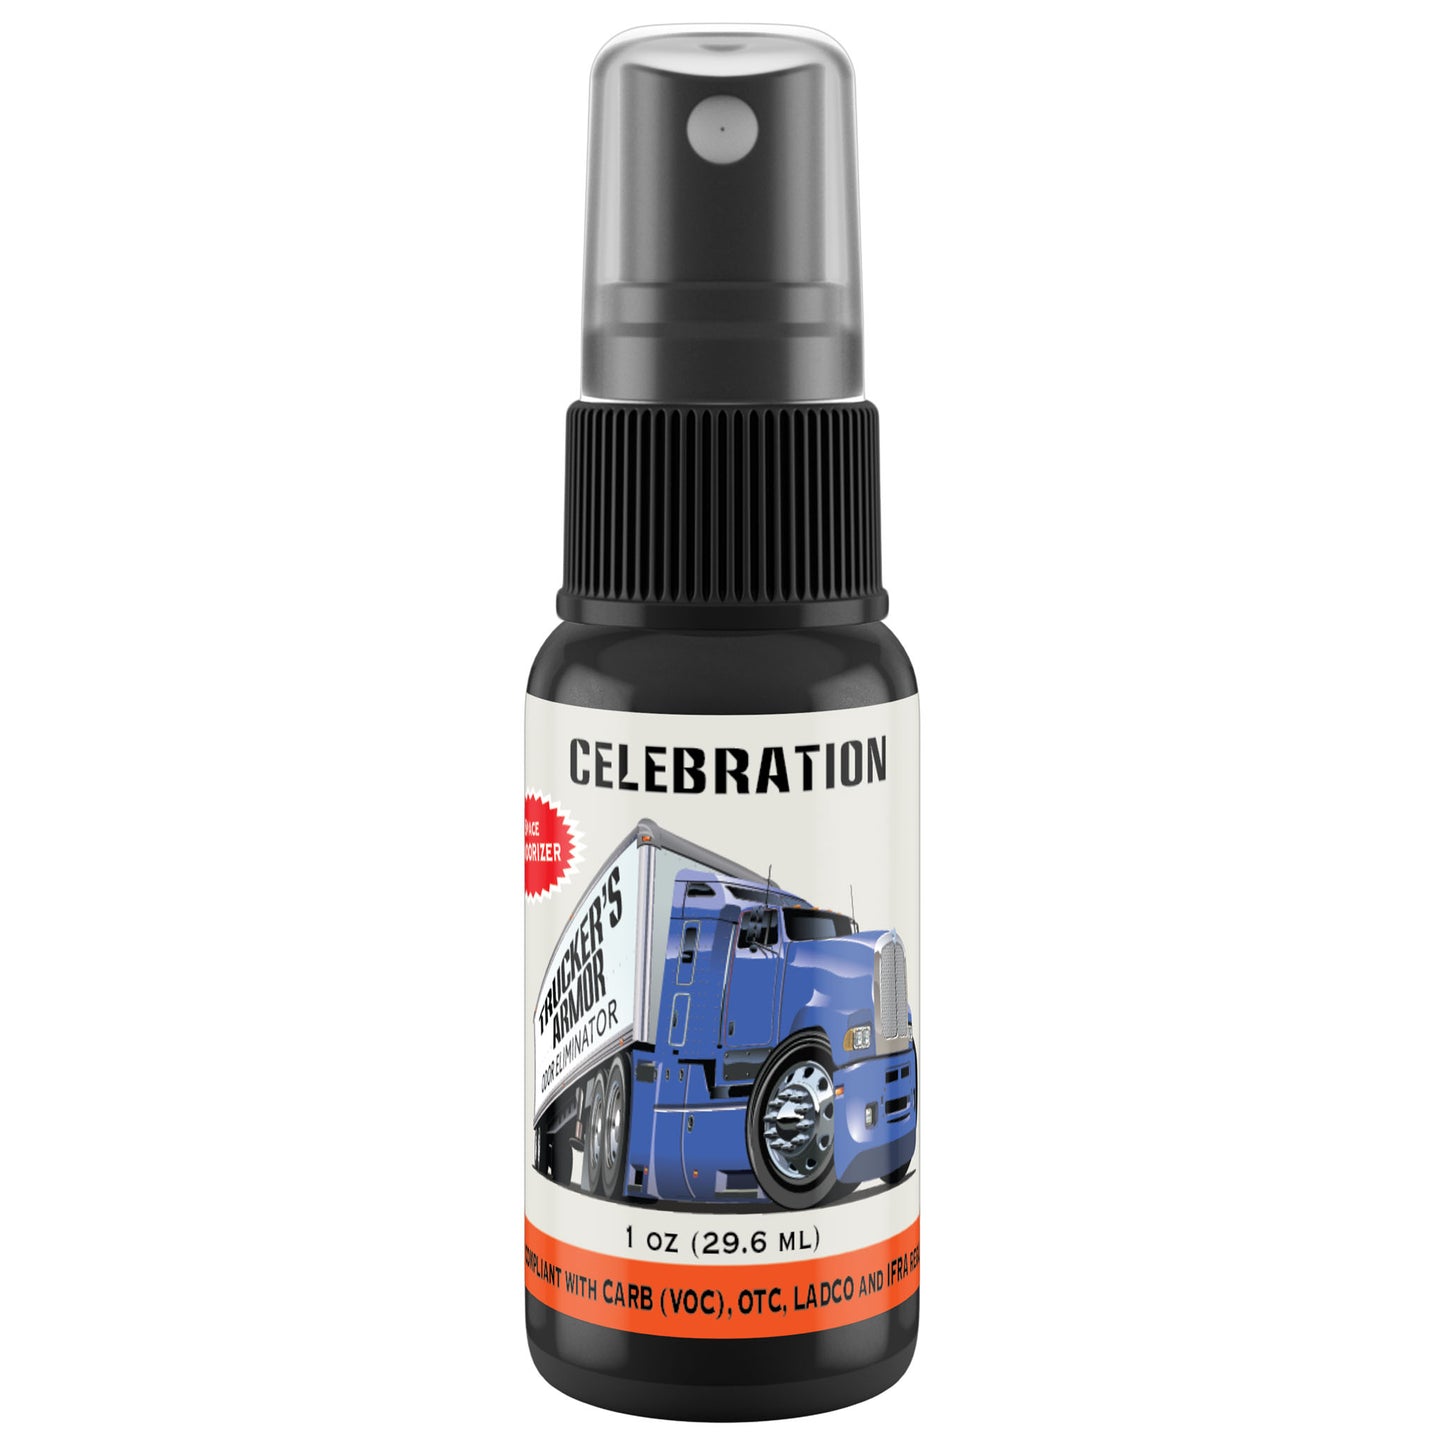 Trucker's Armor Odor Eliminator - Celebration Scent